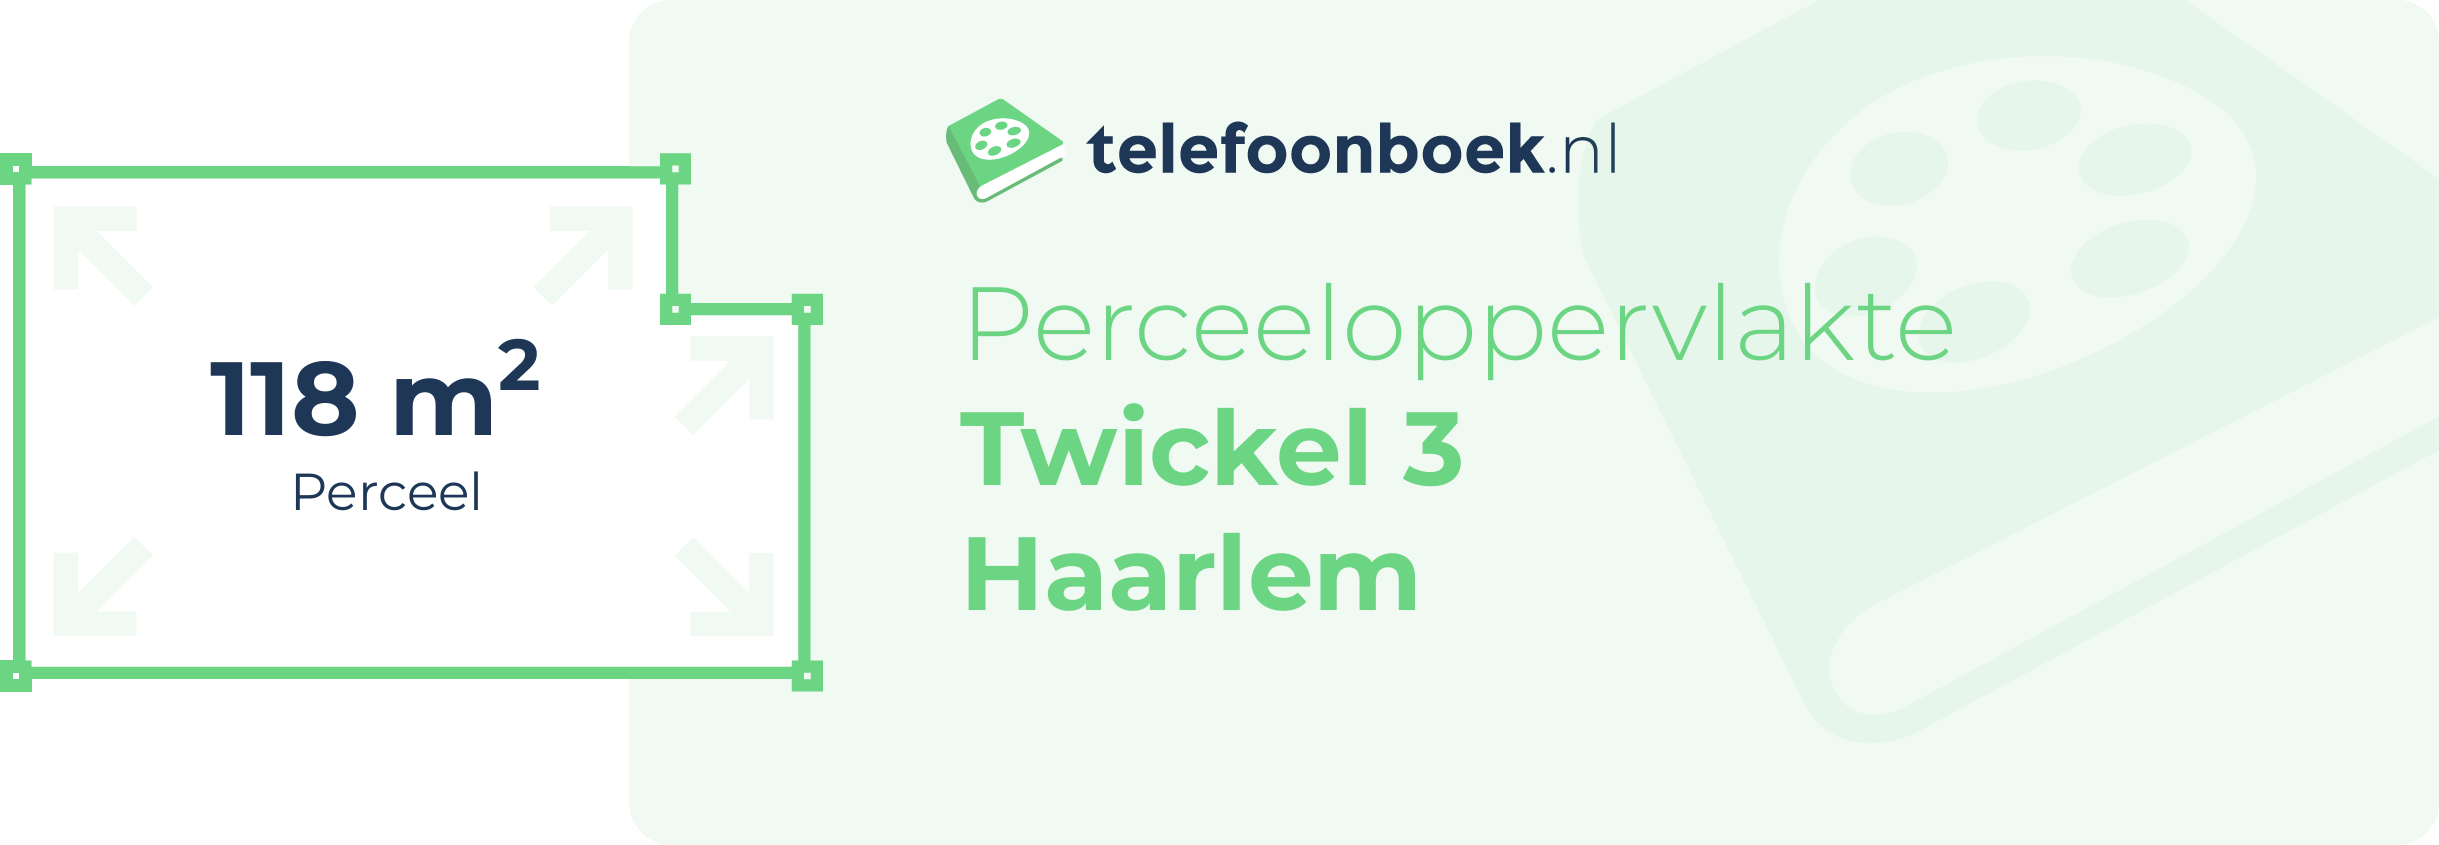 Perceeloppervlakte Twickel 3 Haarlem